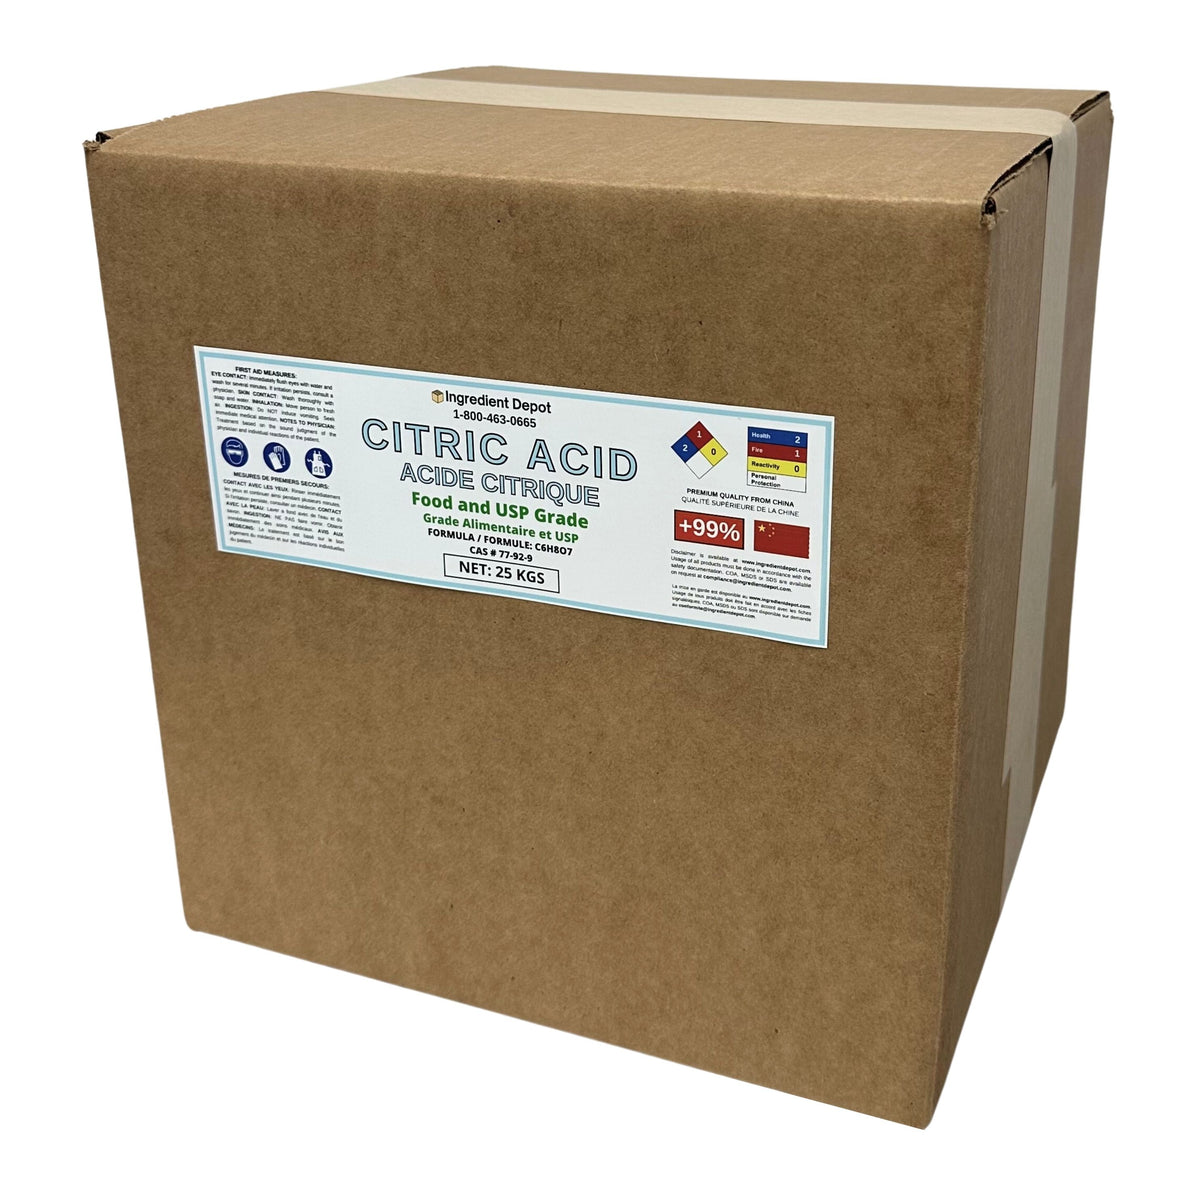 Citric Acid Food and USP Grade (China) 25 kgs